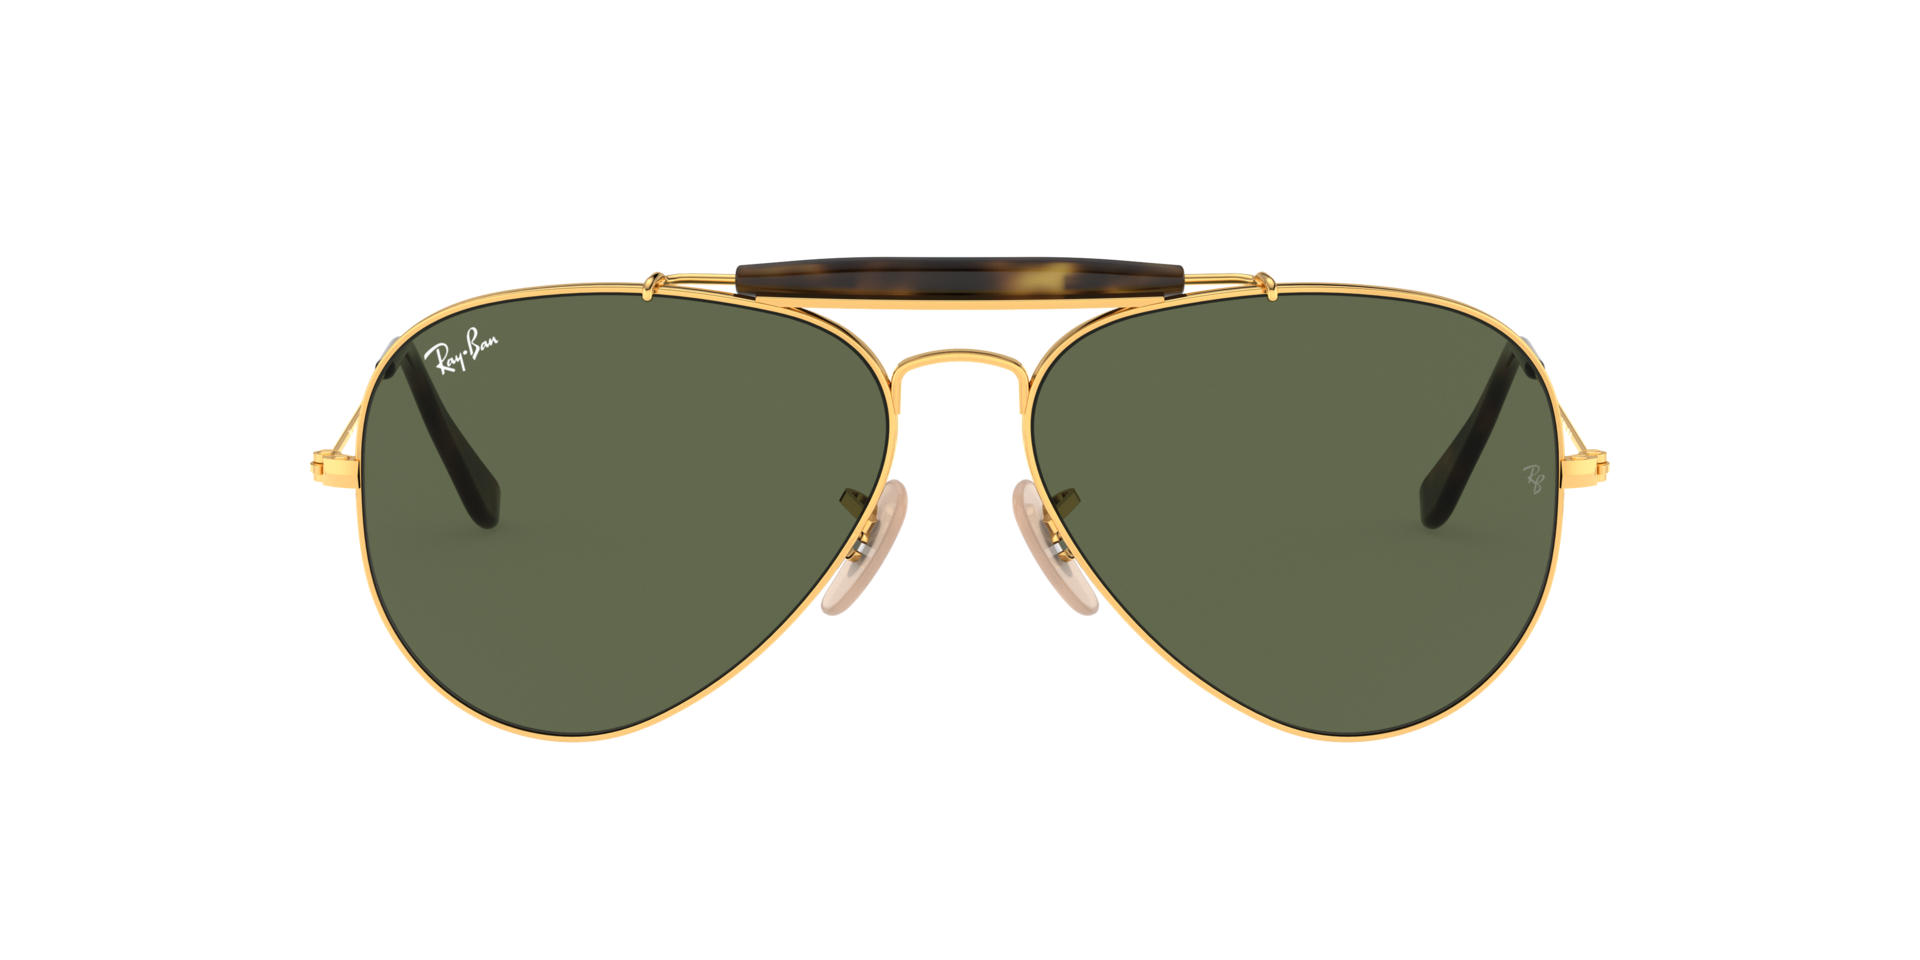 Buy Ray-Ban Outdoorsmanii Sunglasses Online.